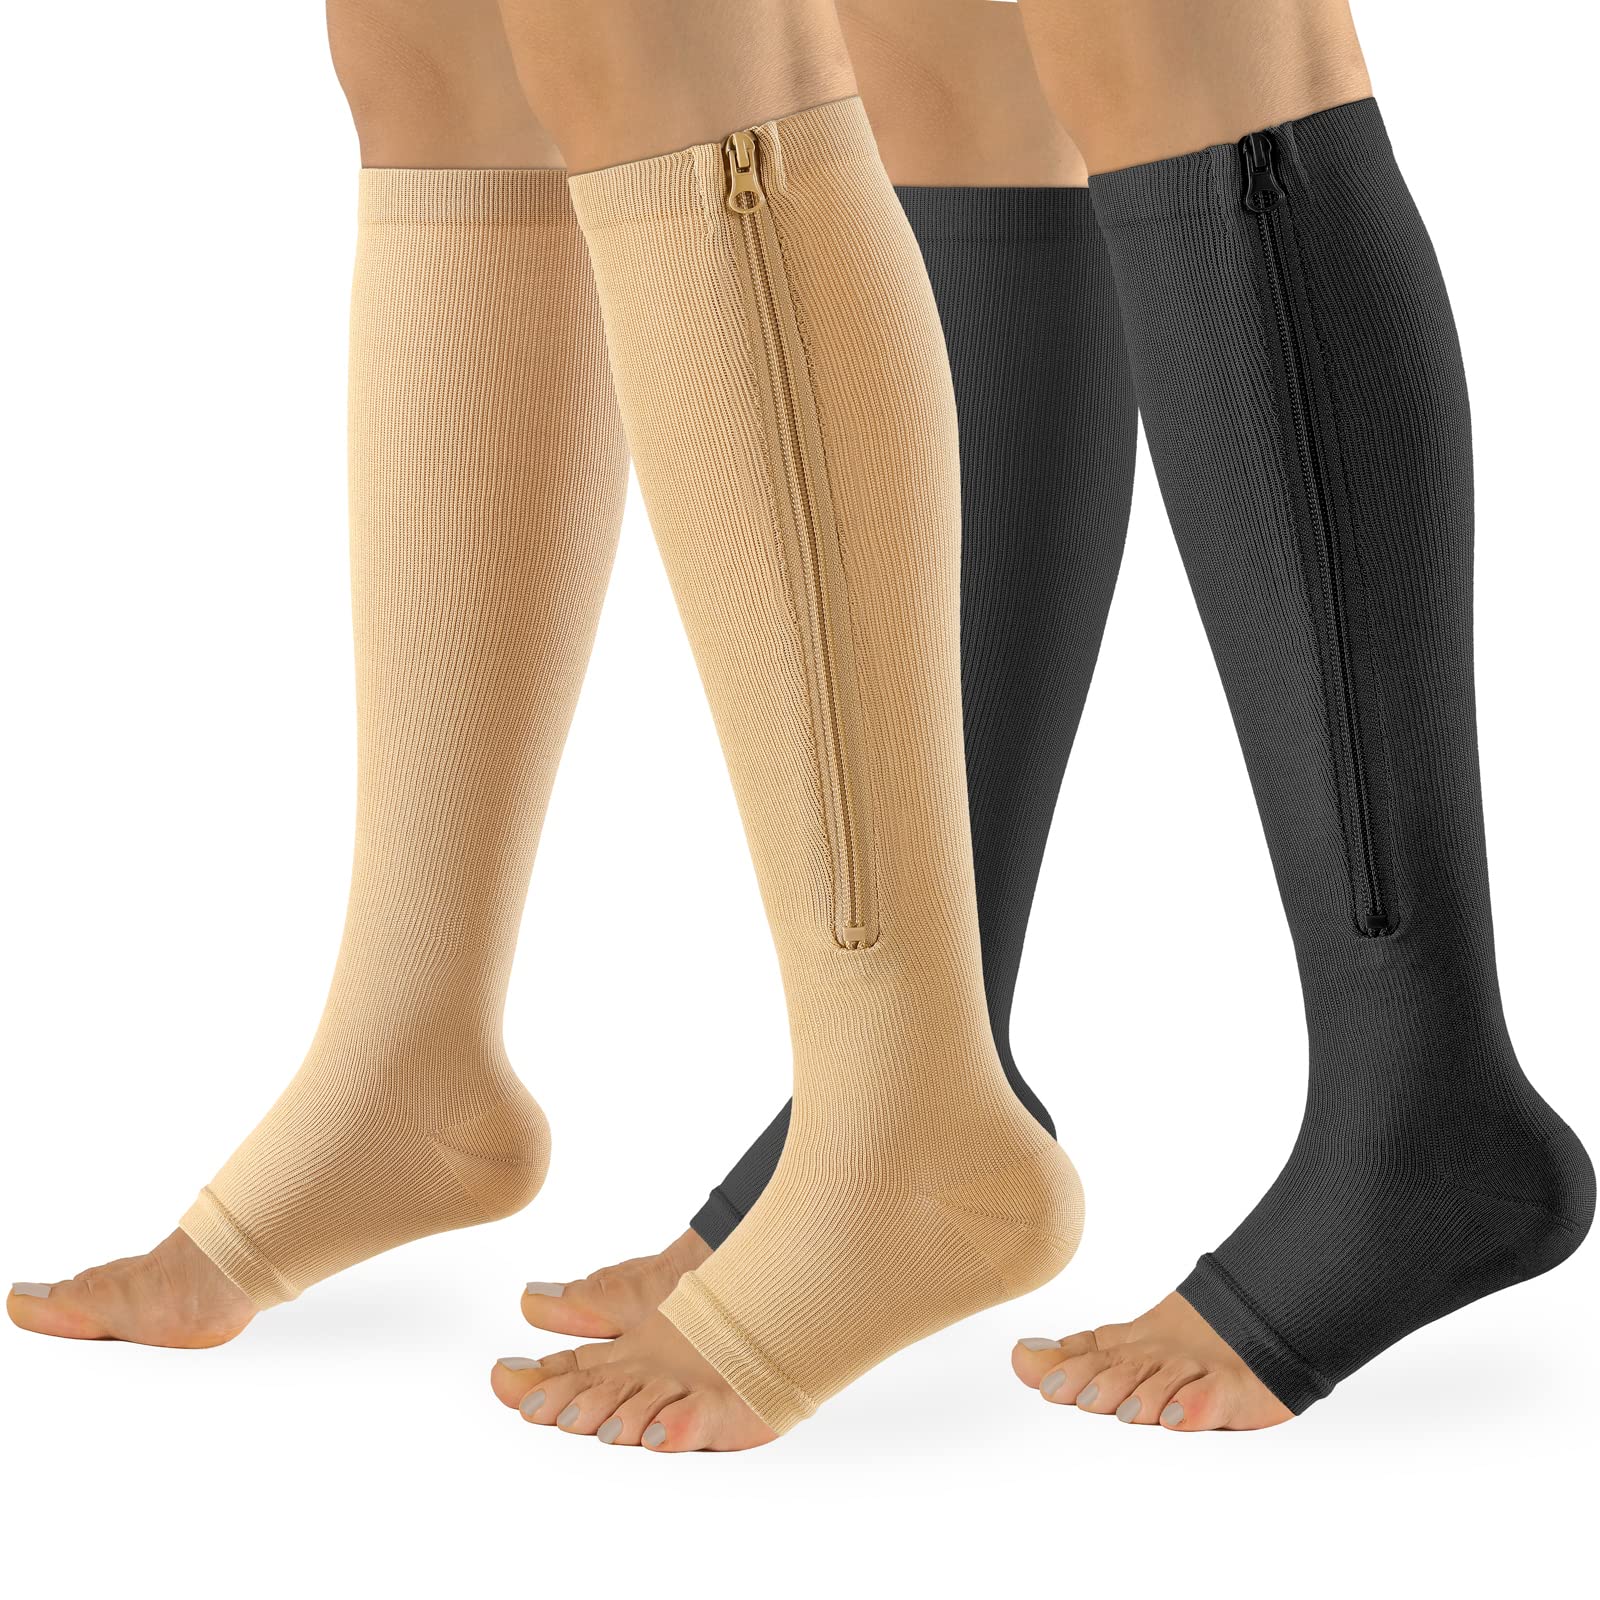 Zipper Compression Socks For Women And Men Open Toe 15-20mmhg